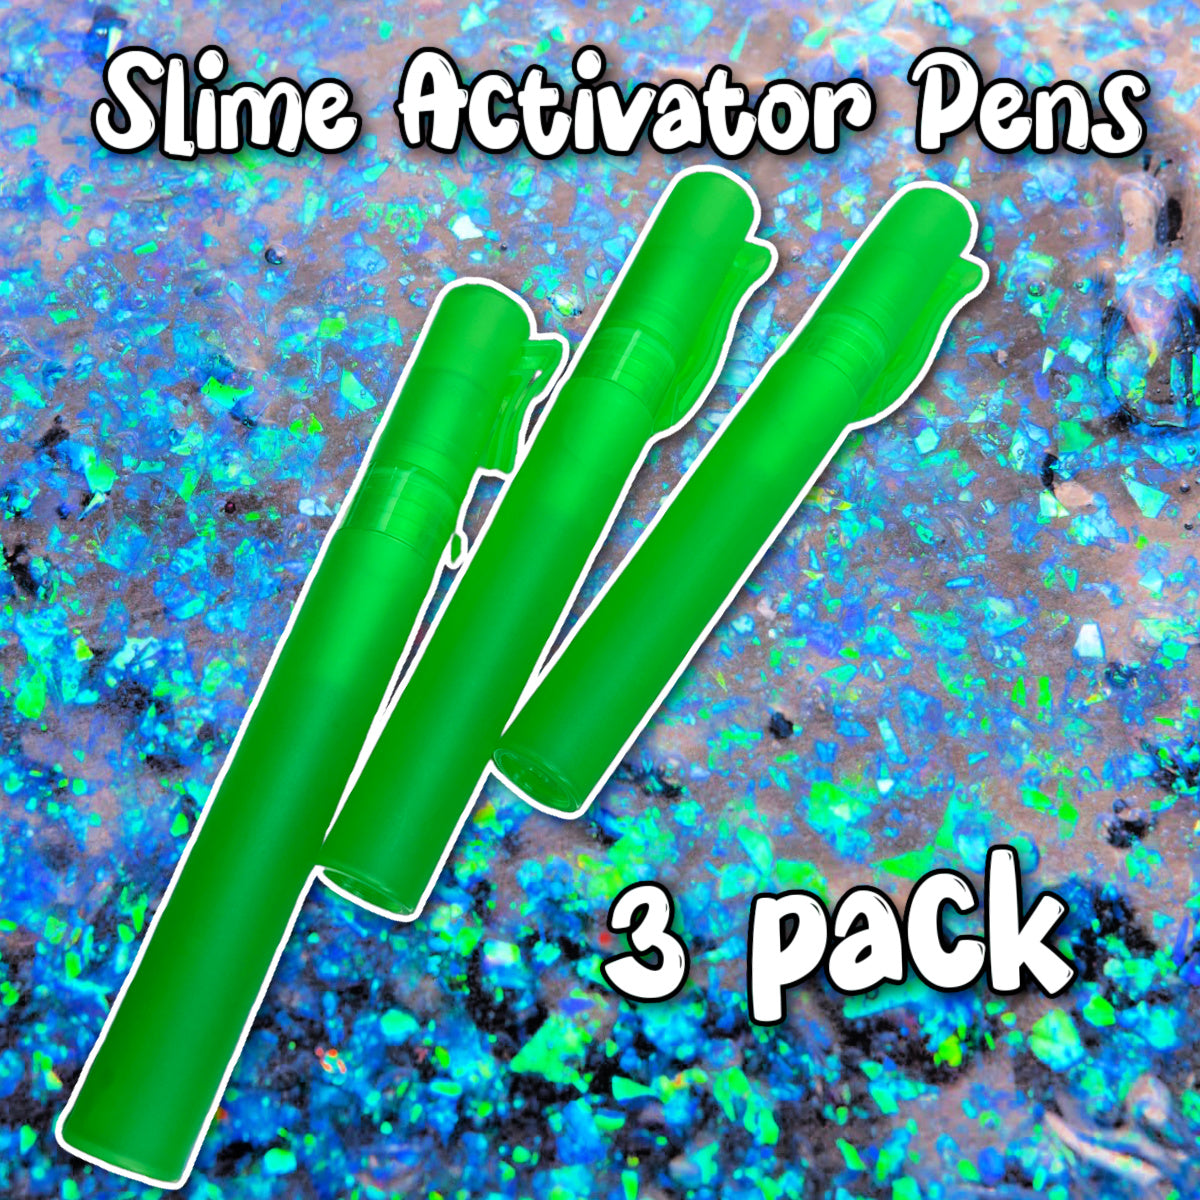 3 Pack Slime Activator Pens